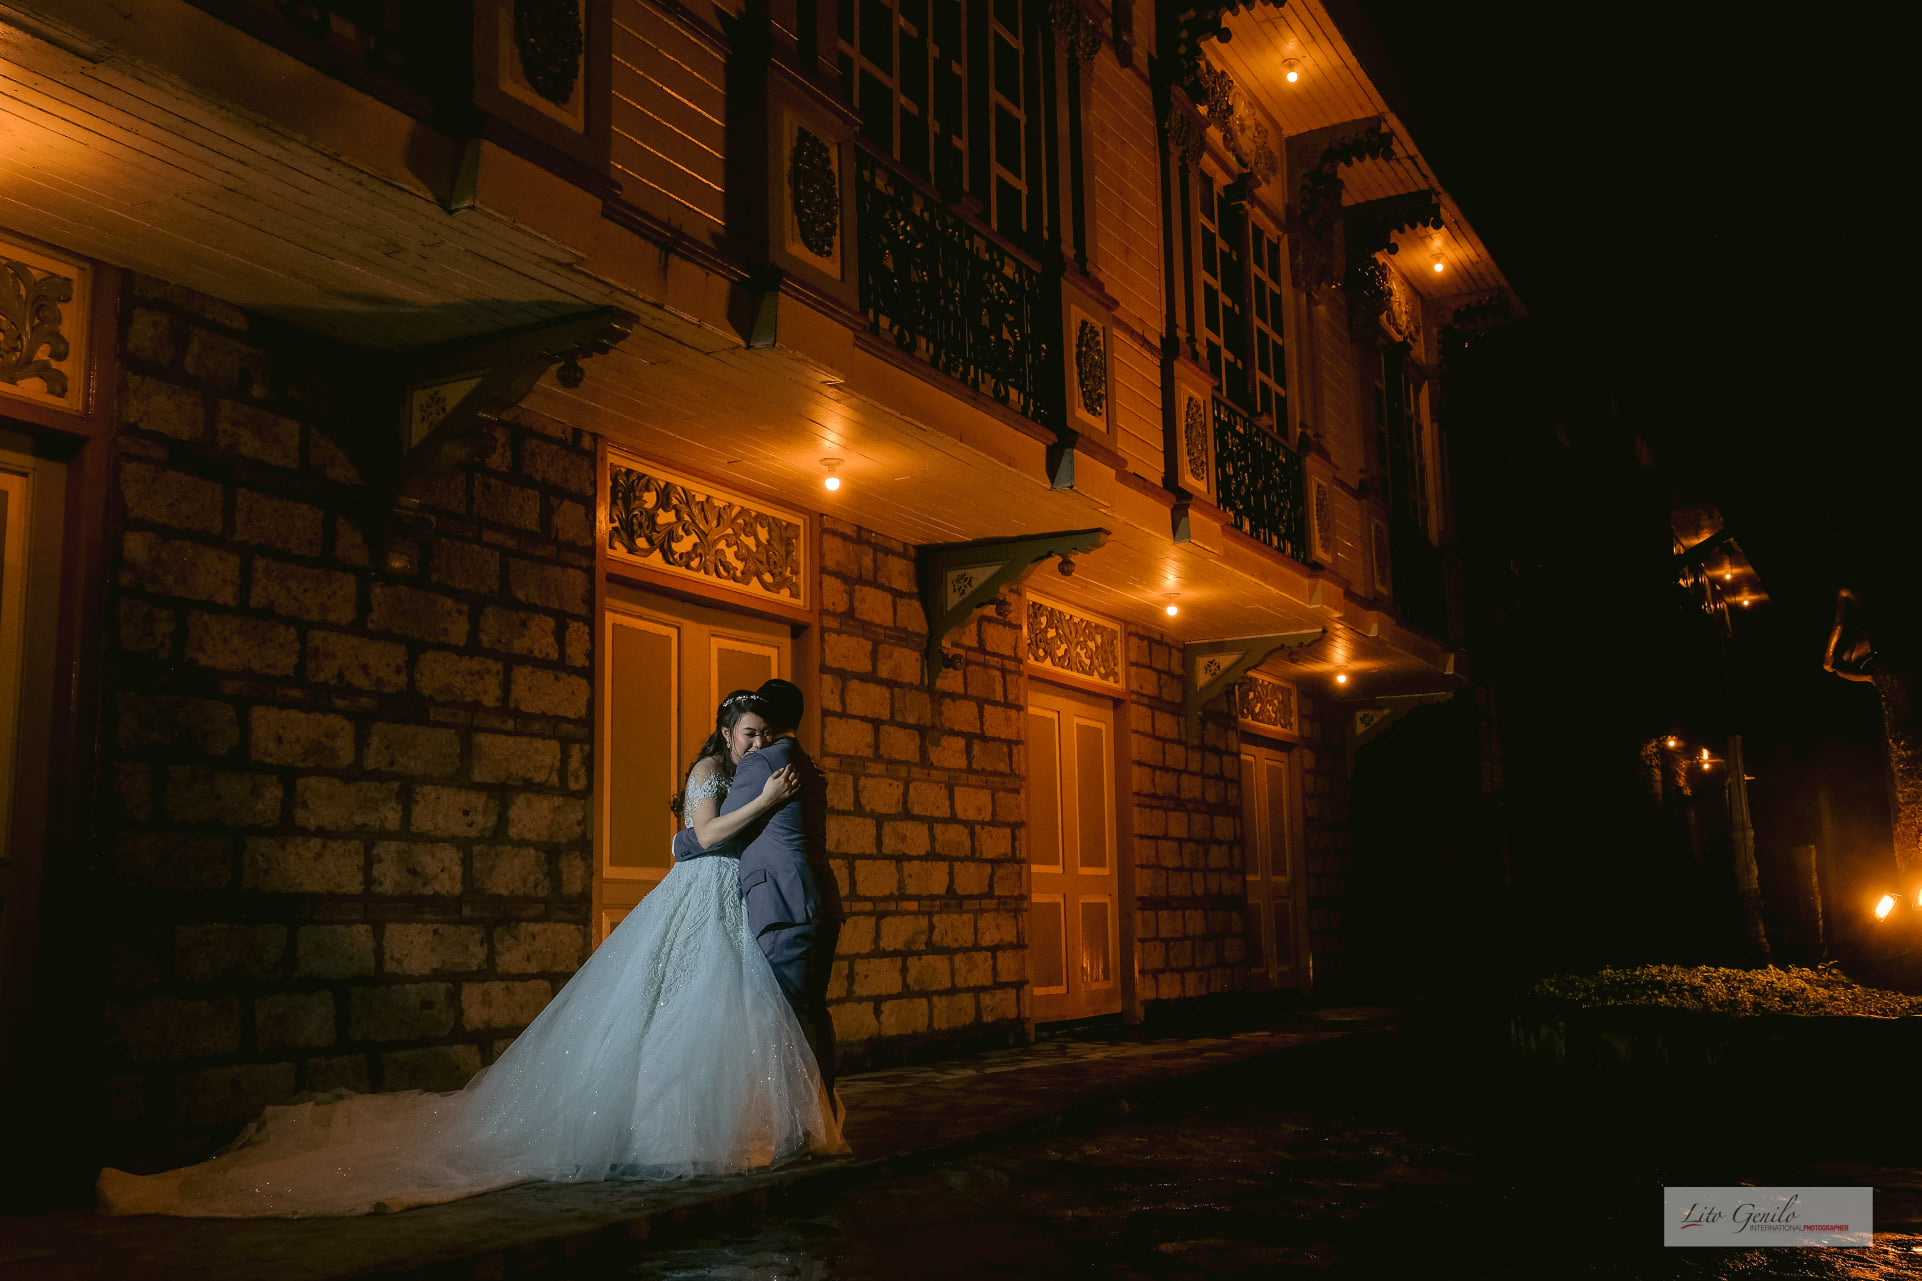 Jansen & Jean’s Intimate Wedding. Captured by Smart Shot Studio.